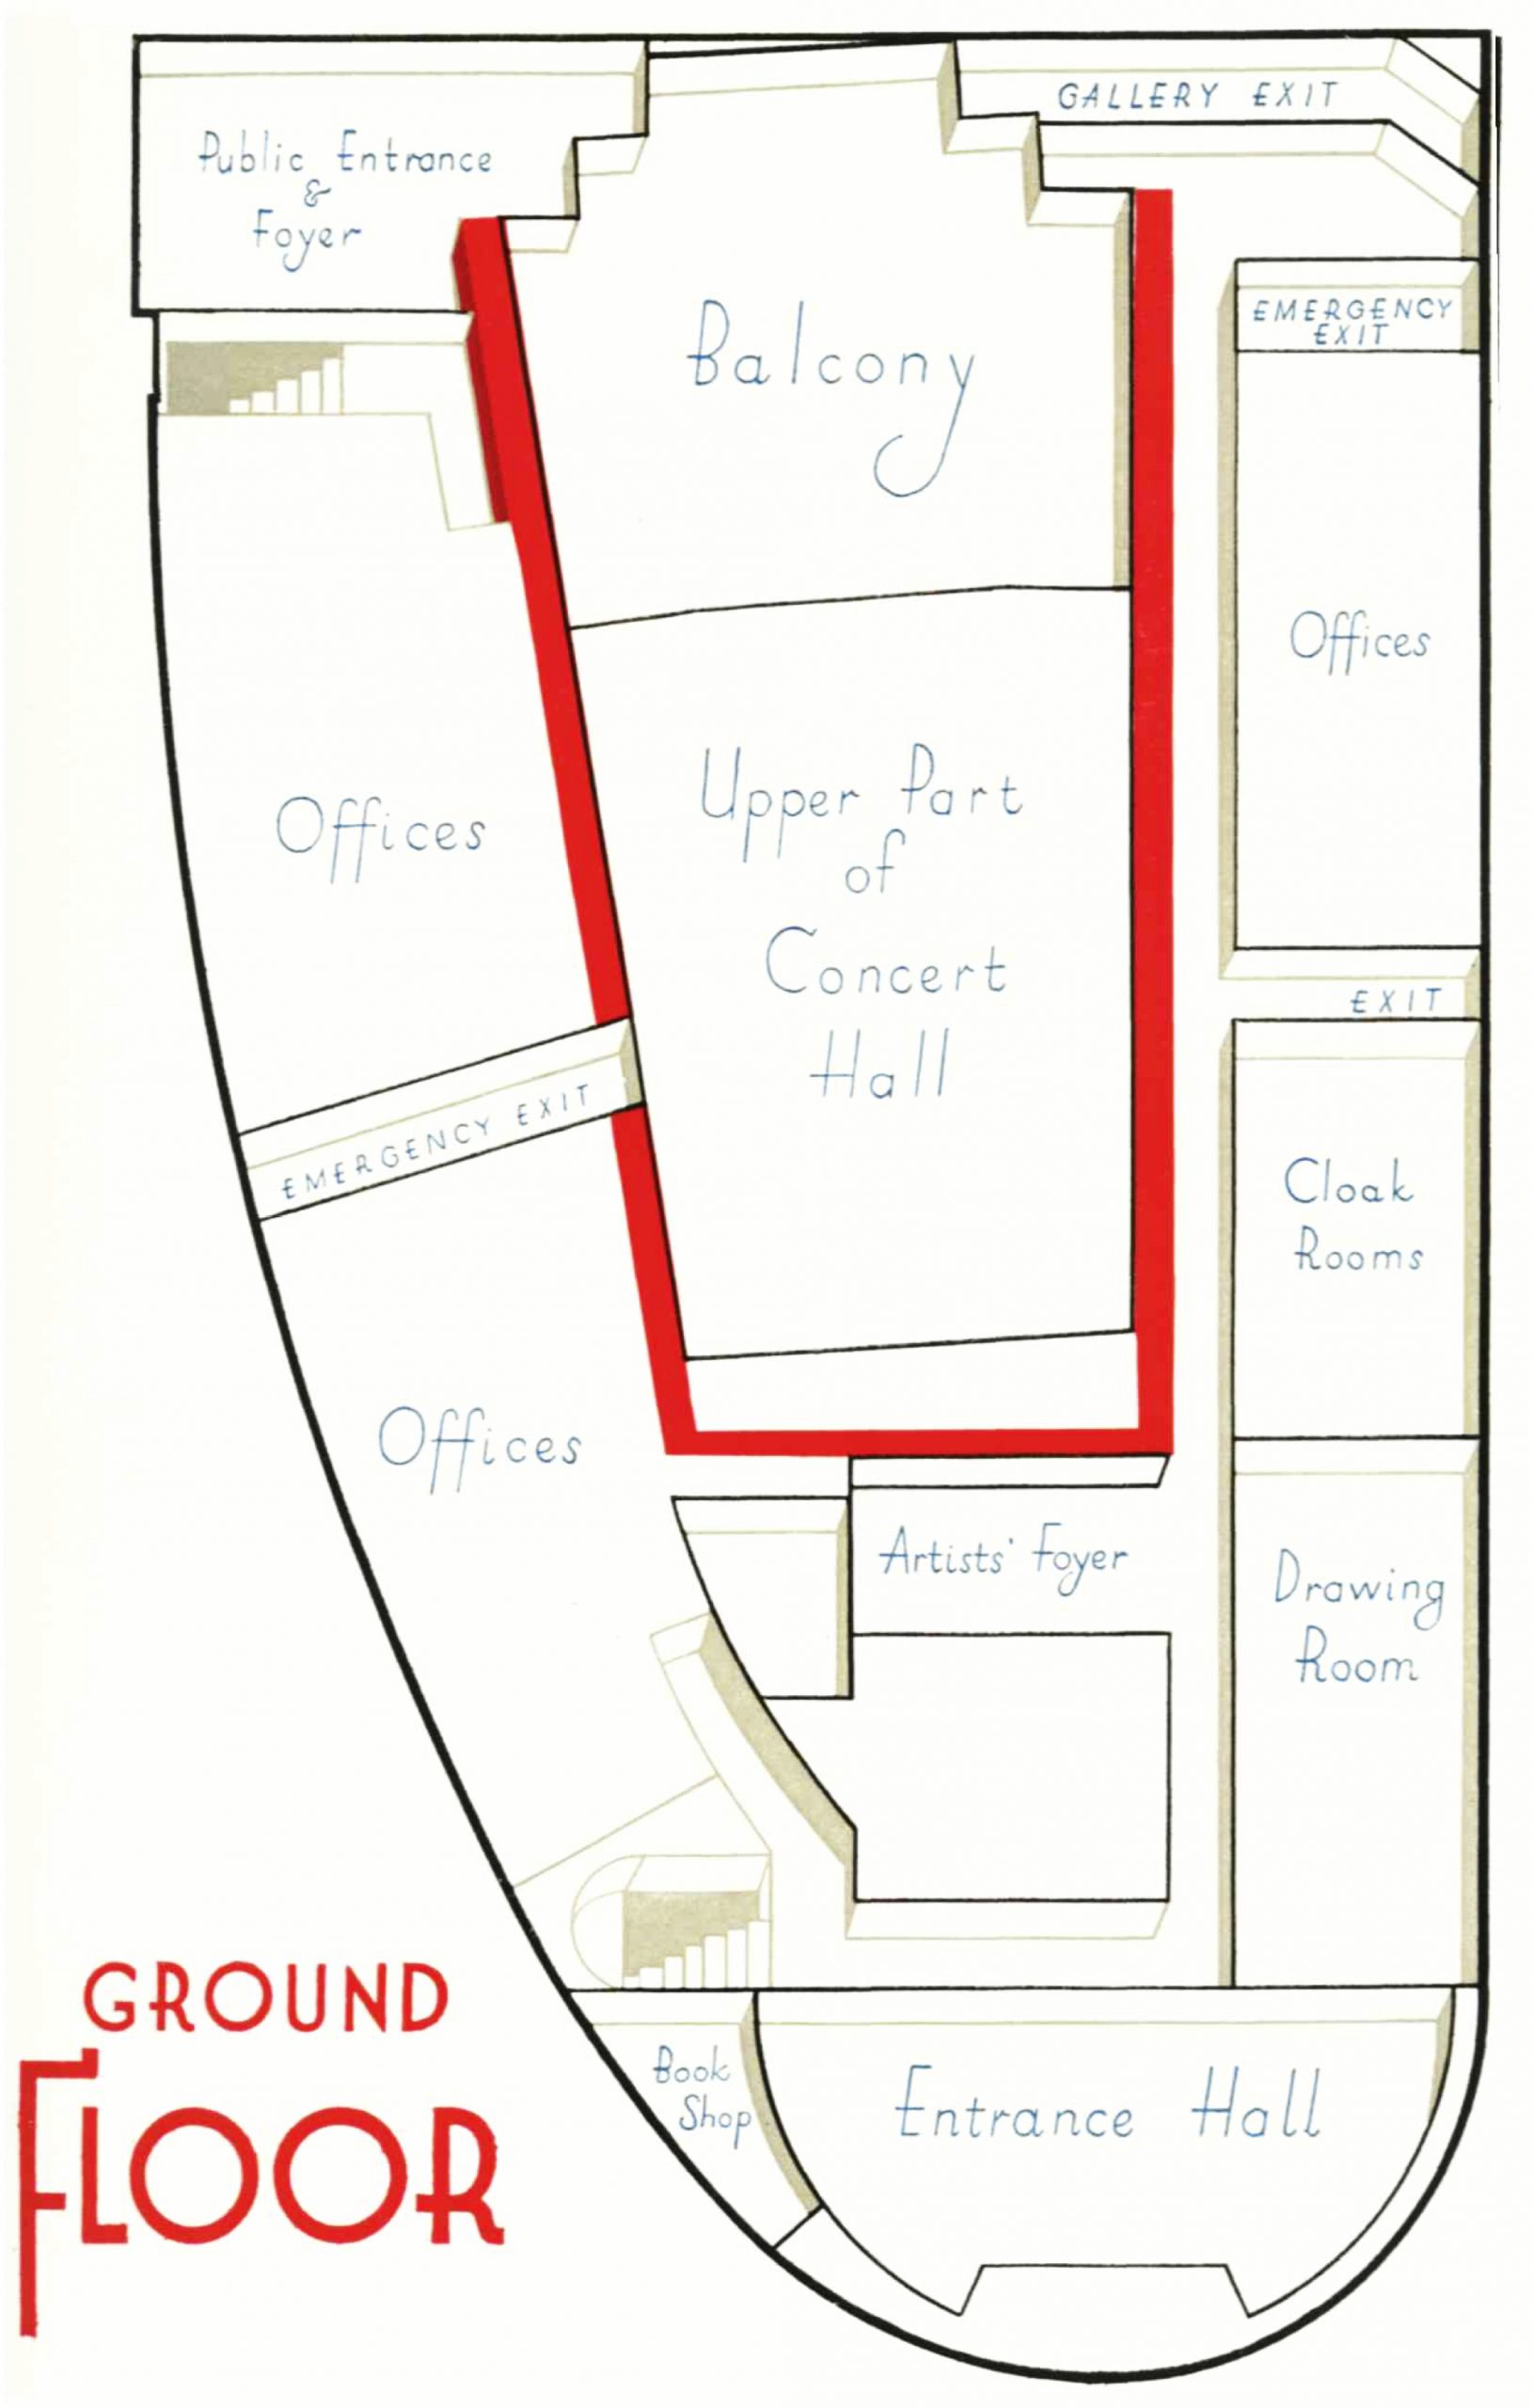 Diagram of the ground floor